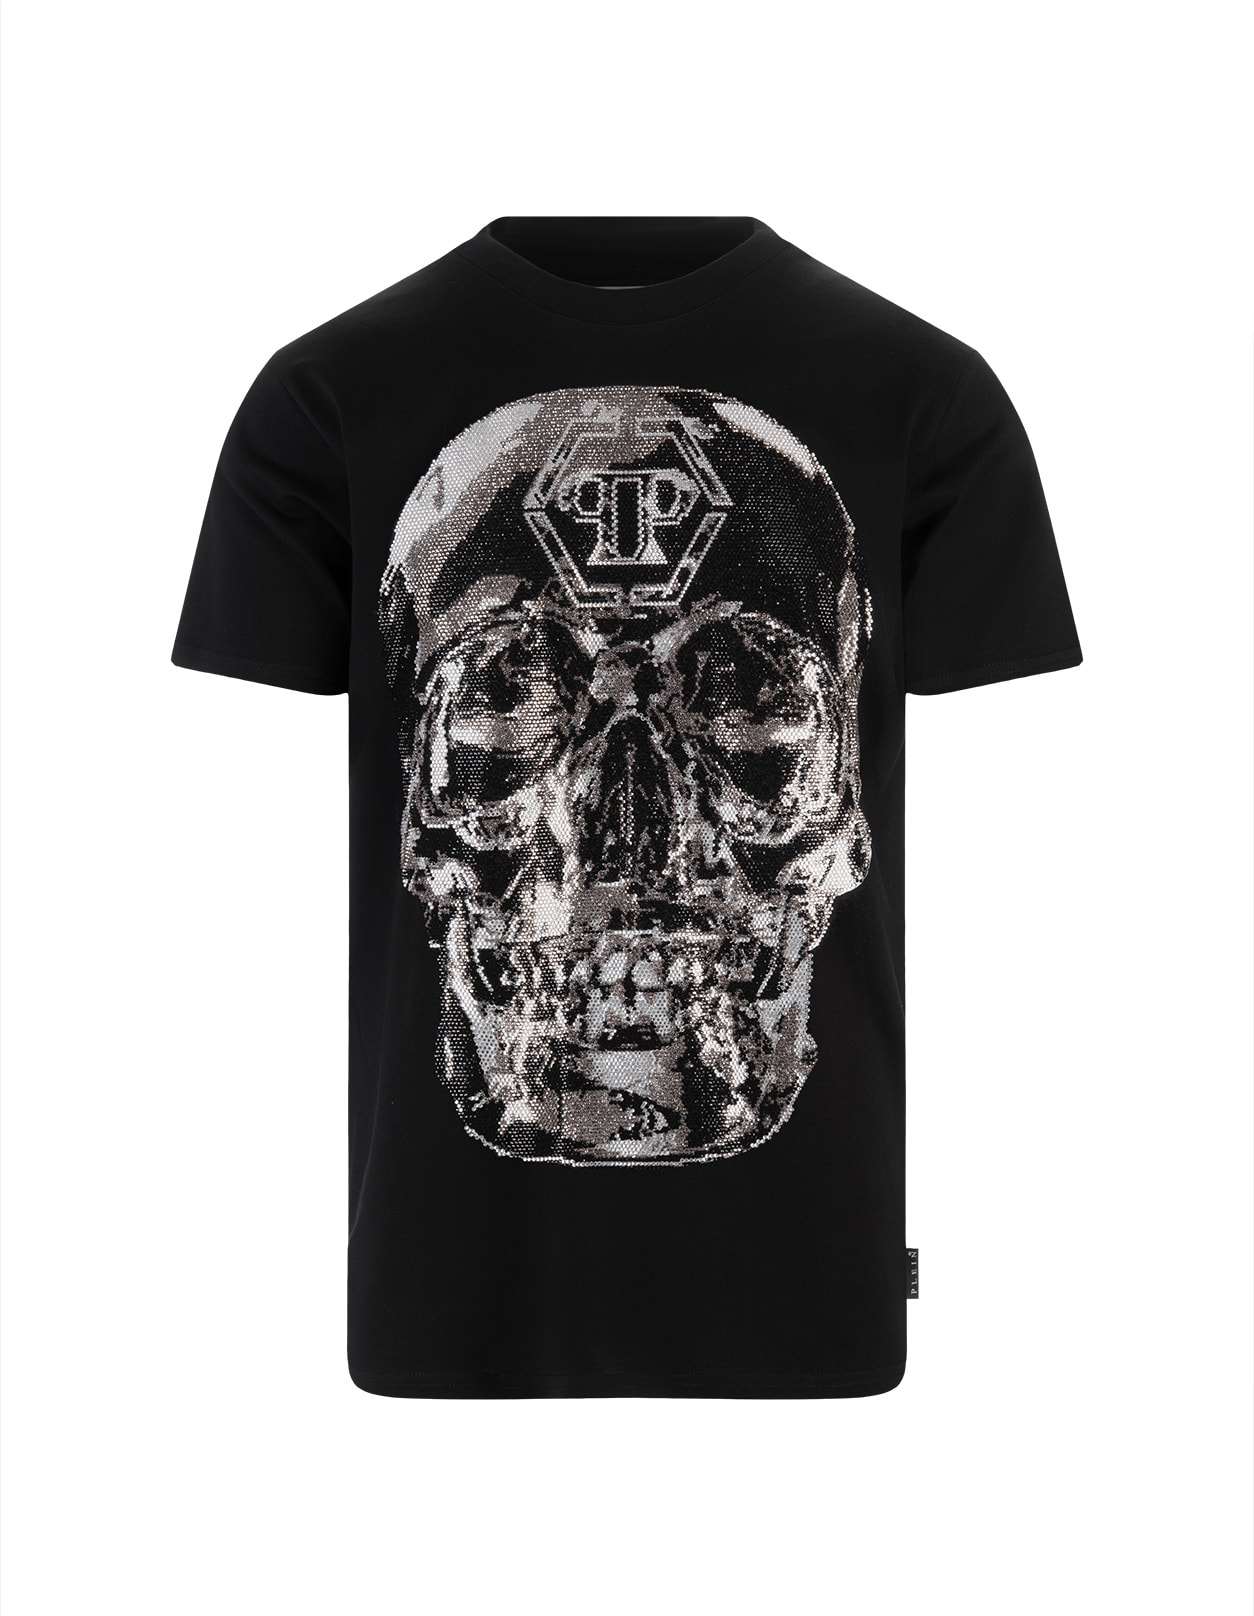 Angreb Sved Amorous Philipp Plein Black Skull Glass T-shirt | italist